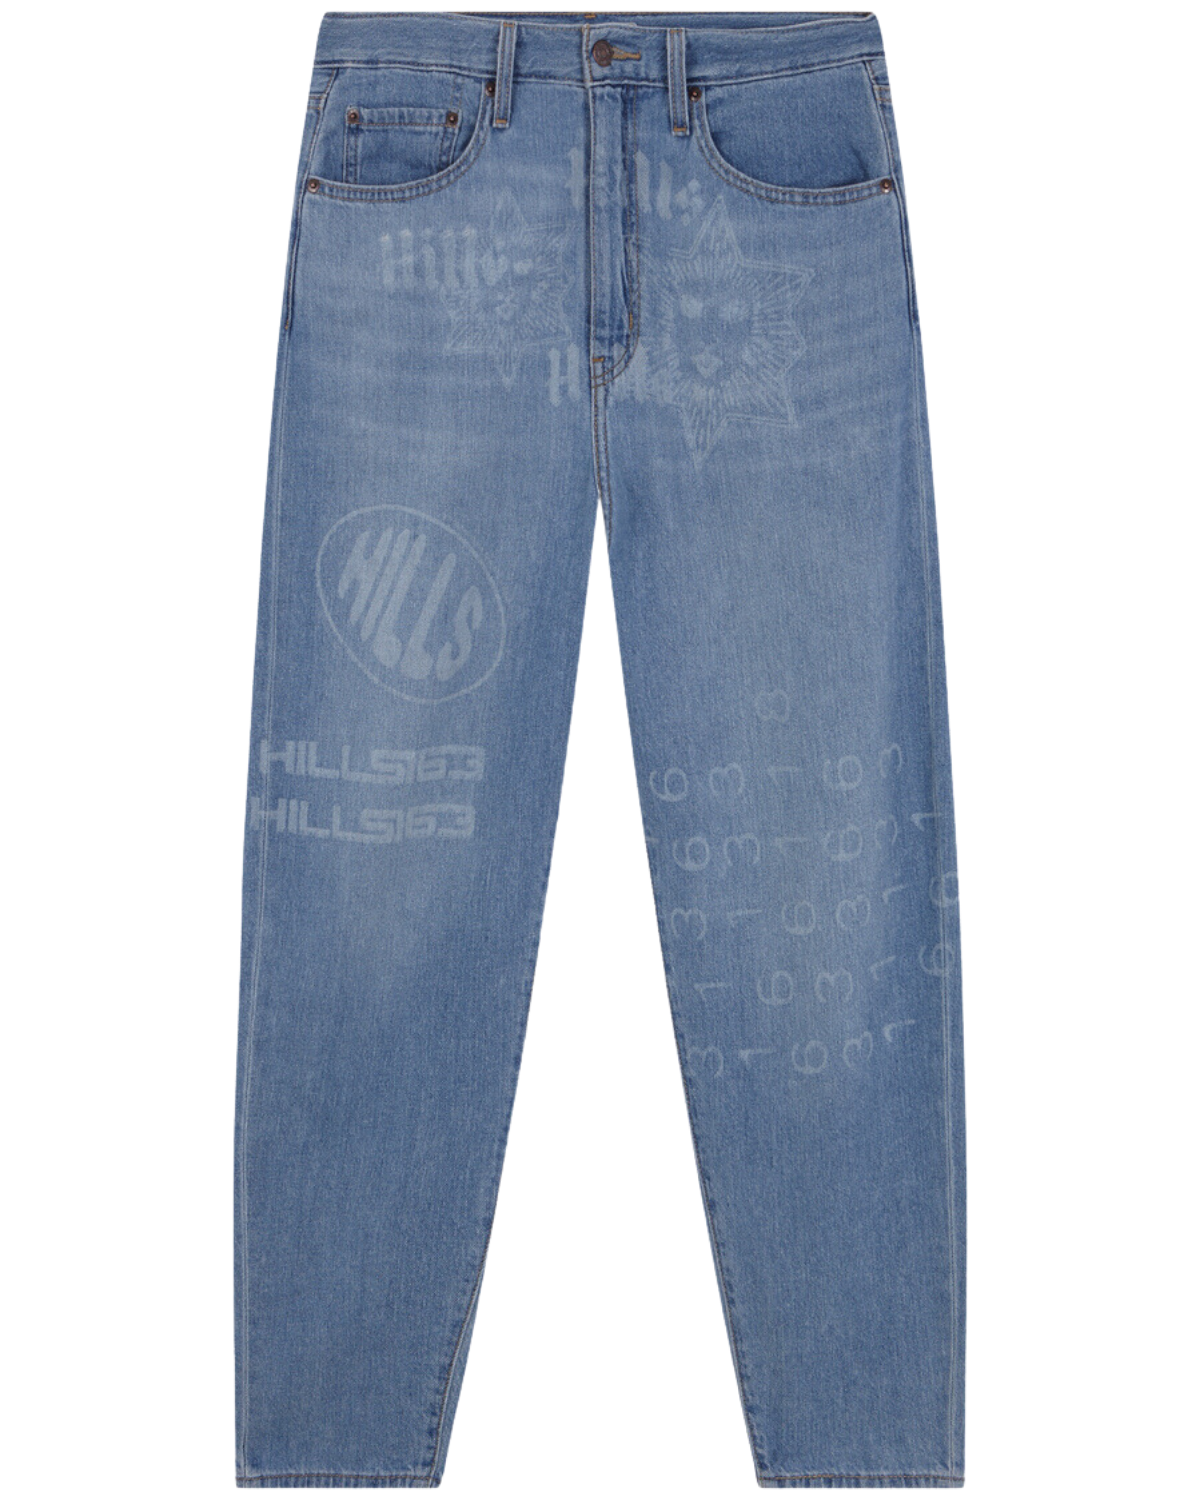 Limited Edition Hills Jeans Design 2 – HILLS163